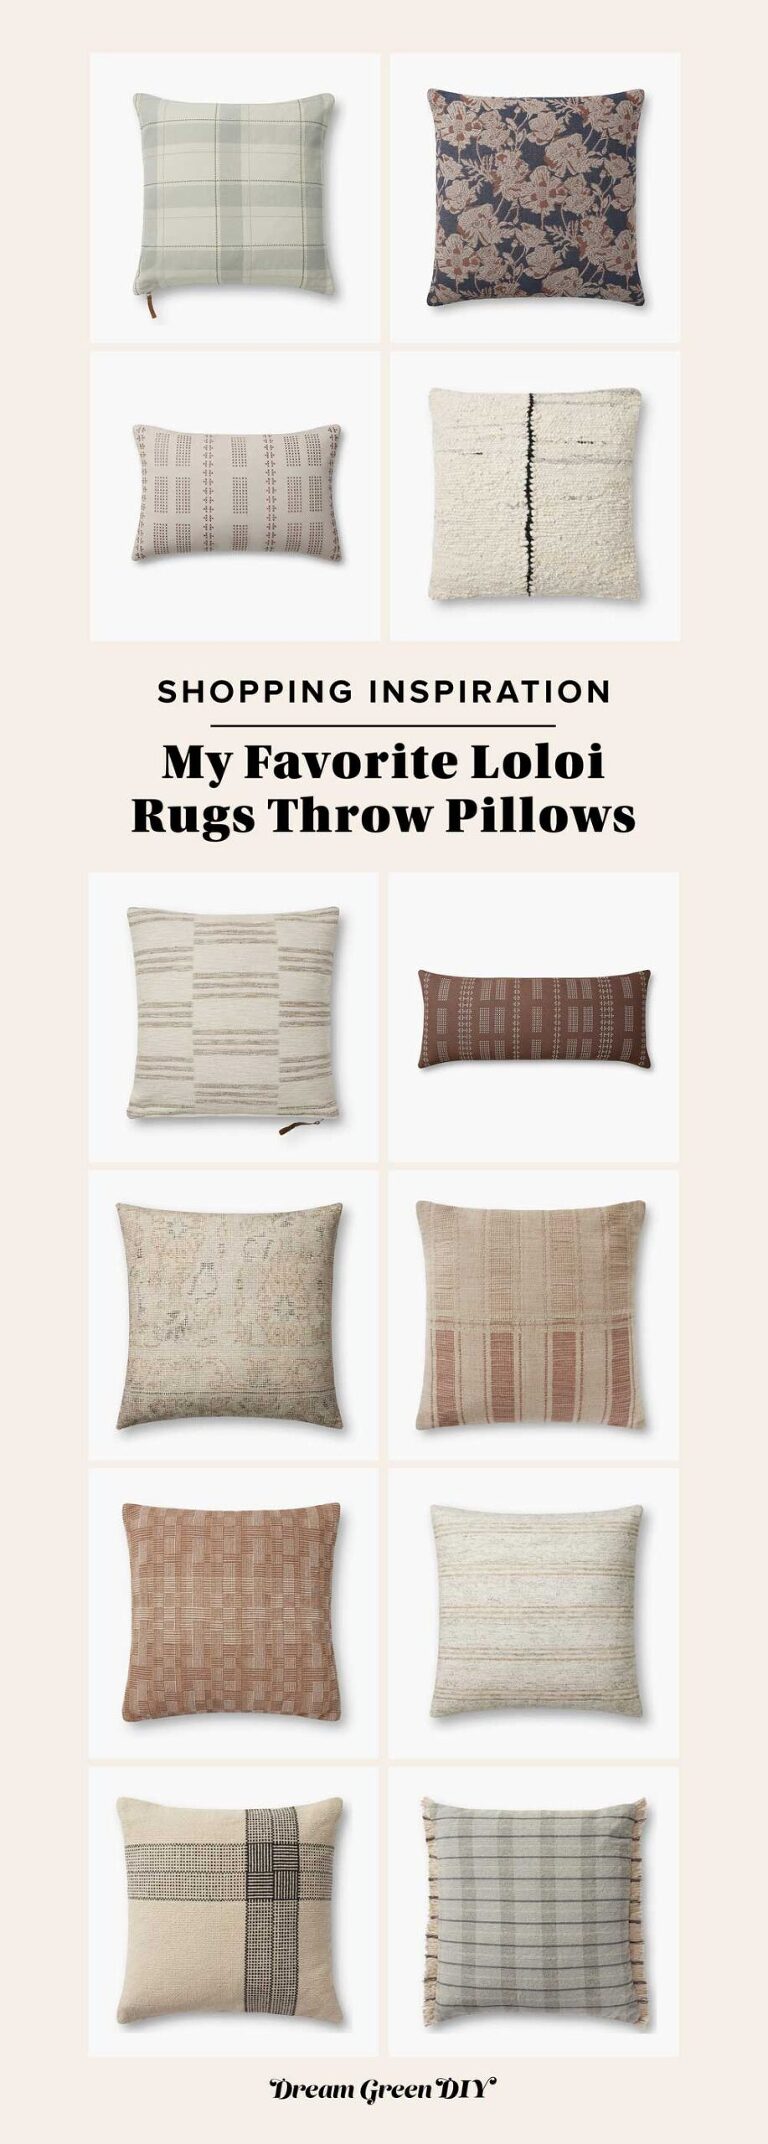 My Favorite Loloi Rugs Throw Pillows